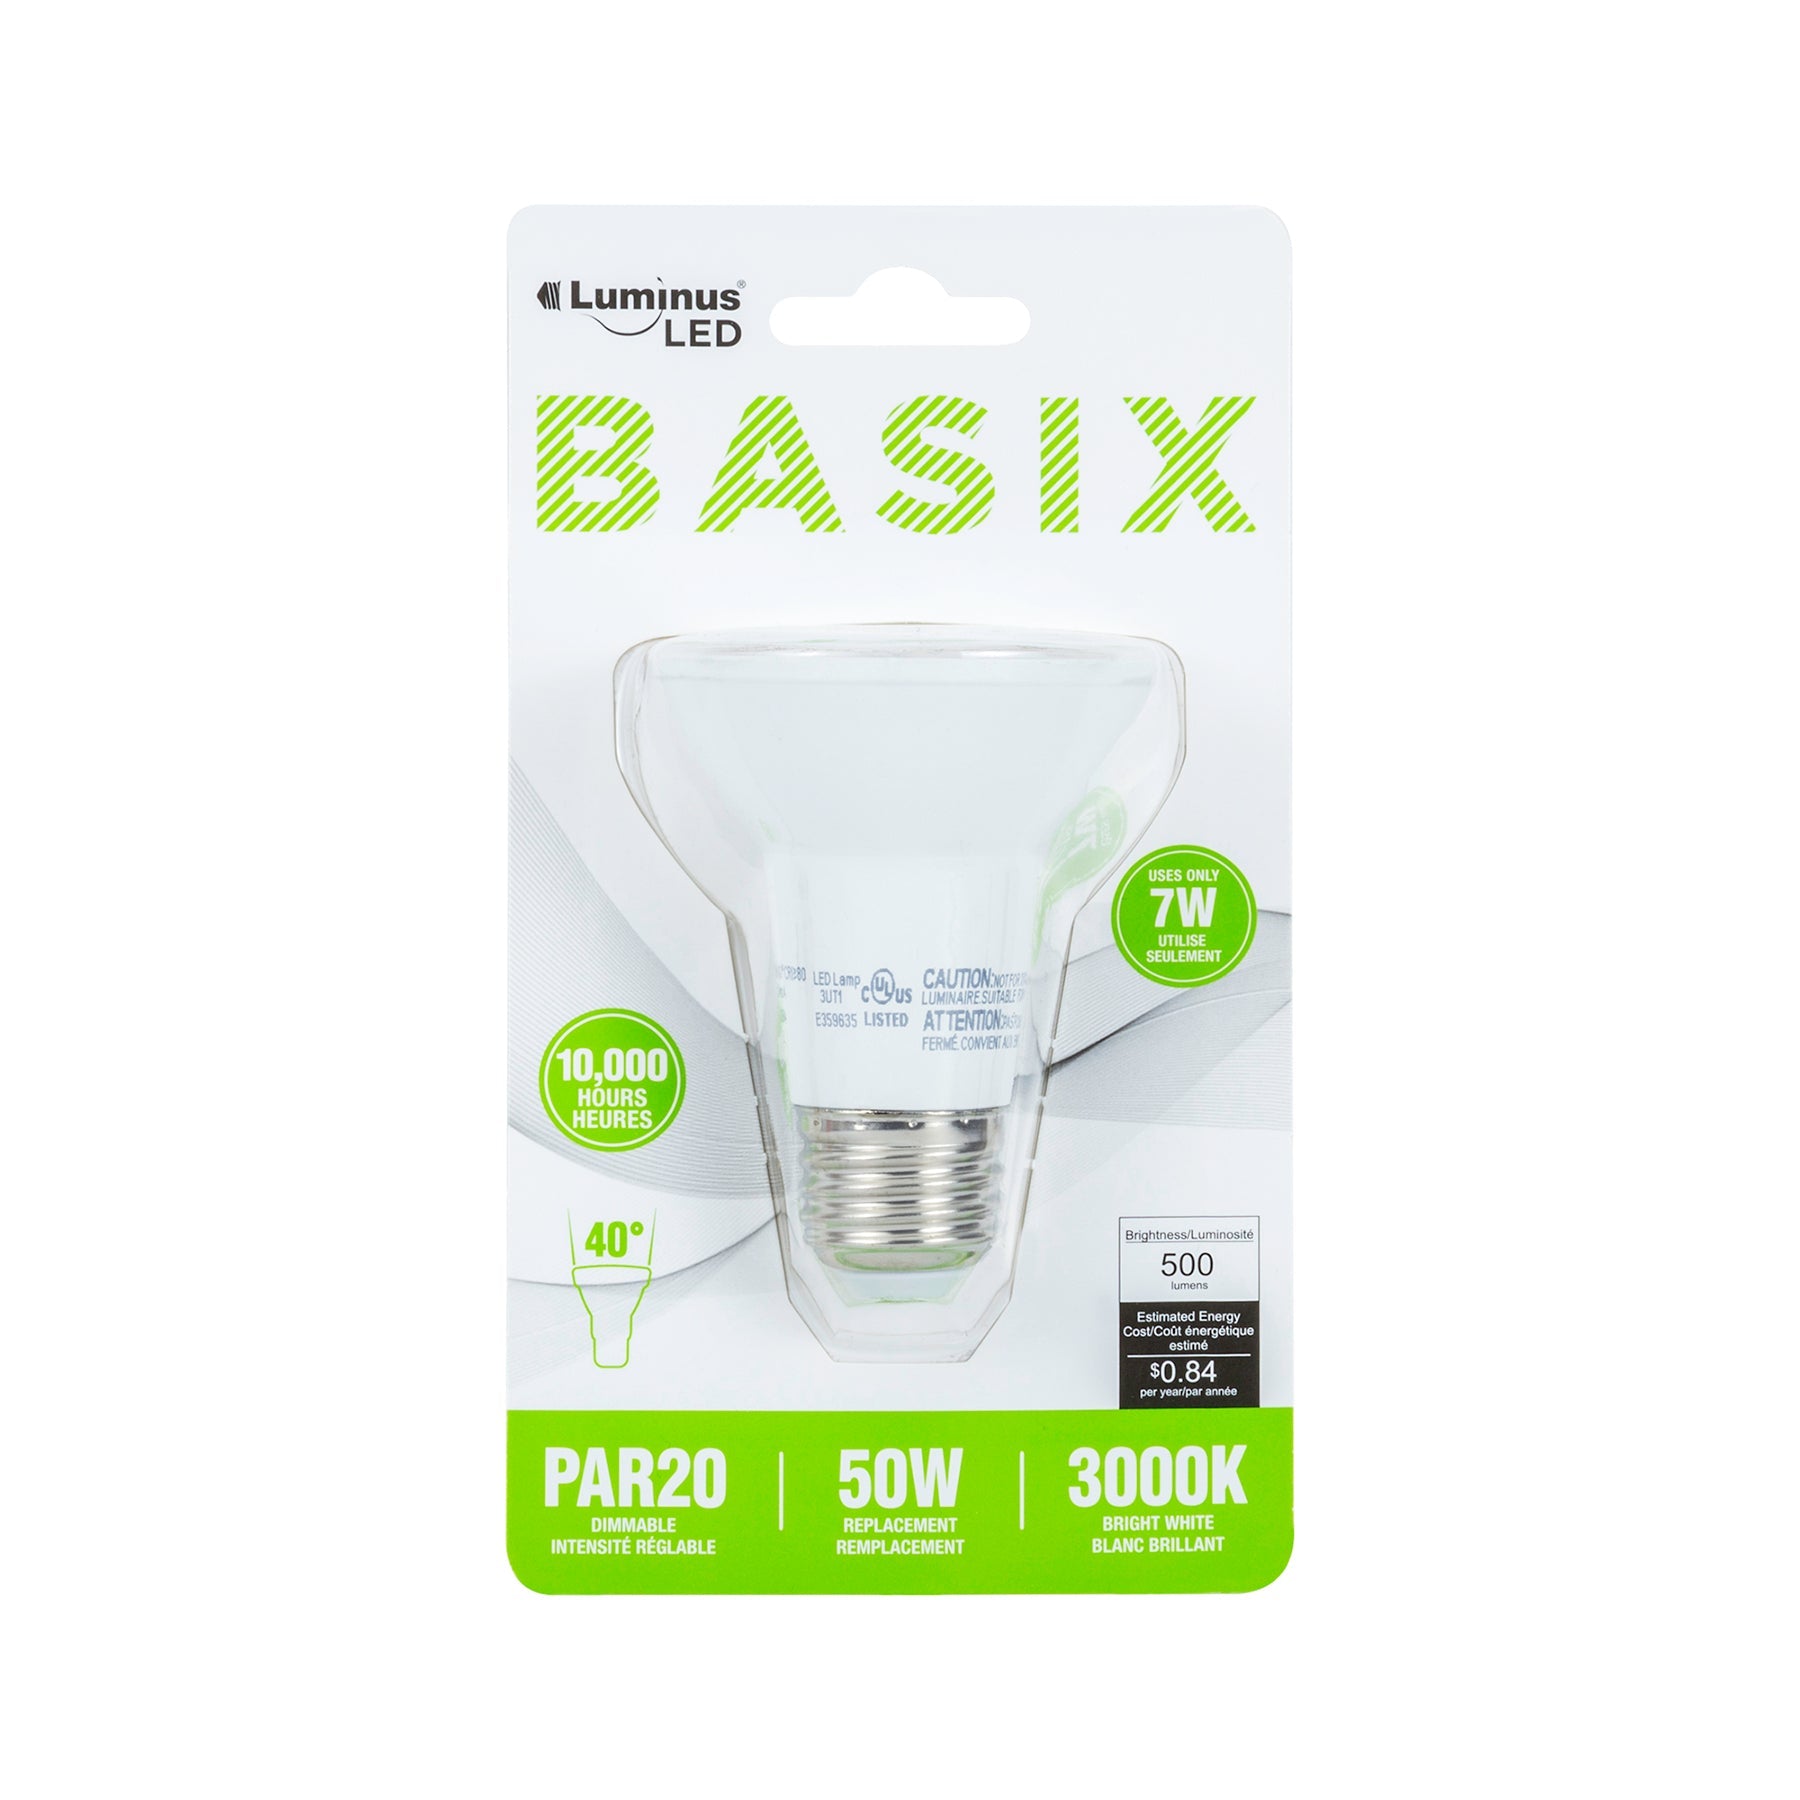 Luminus Led Basix Light Bulb Bright White PAR20 3000K 2.4x3.18in